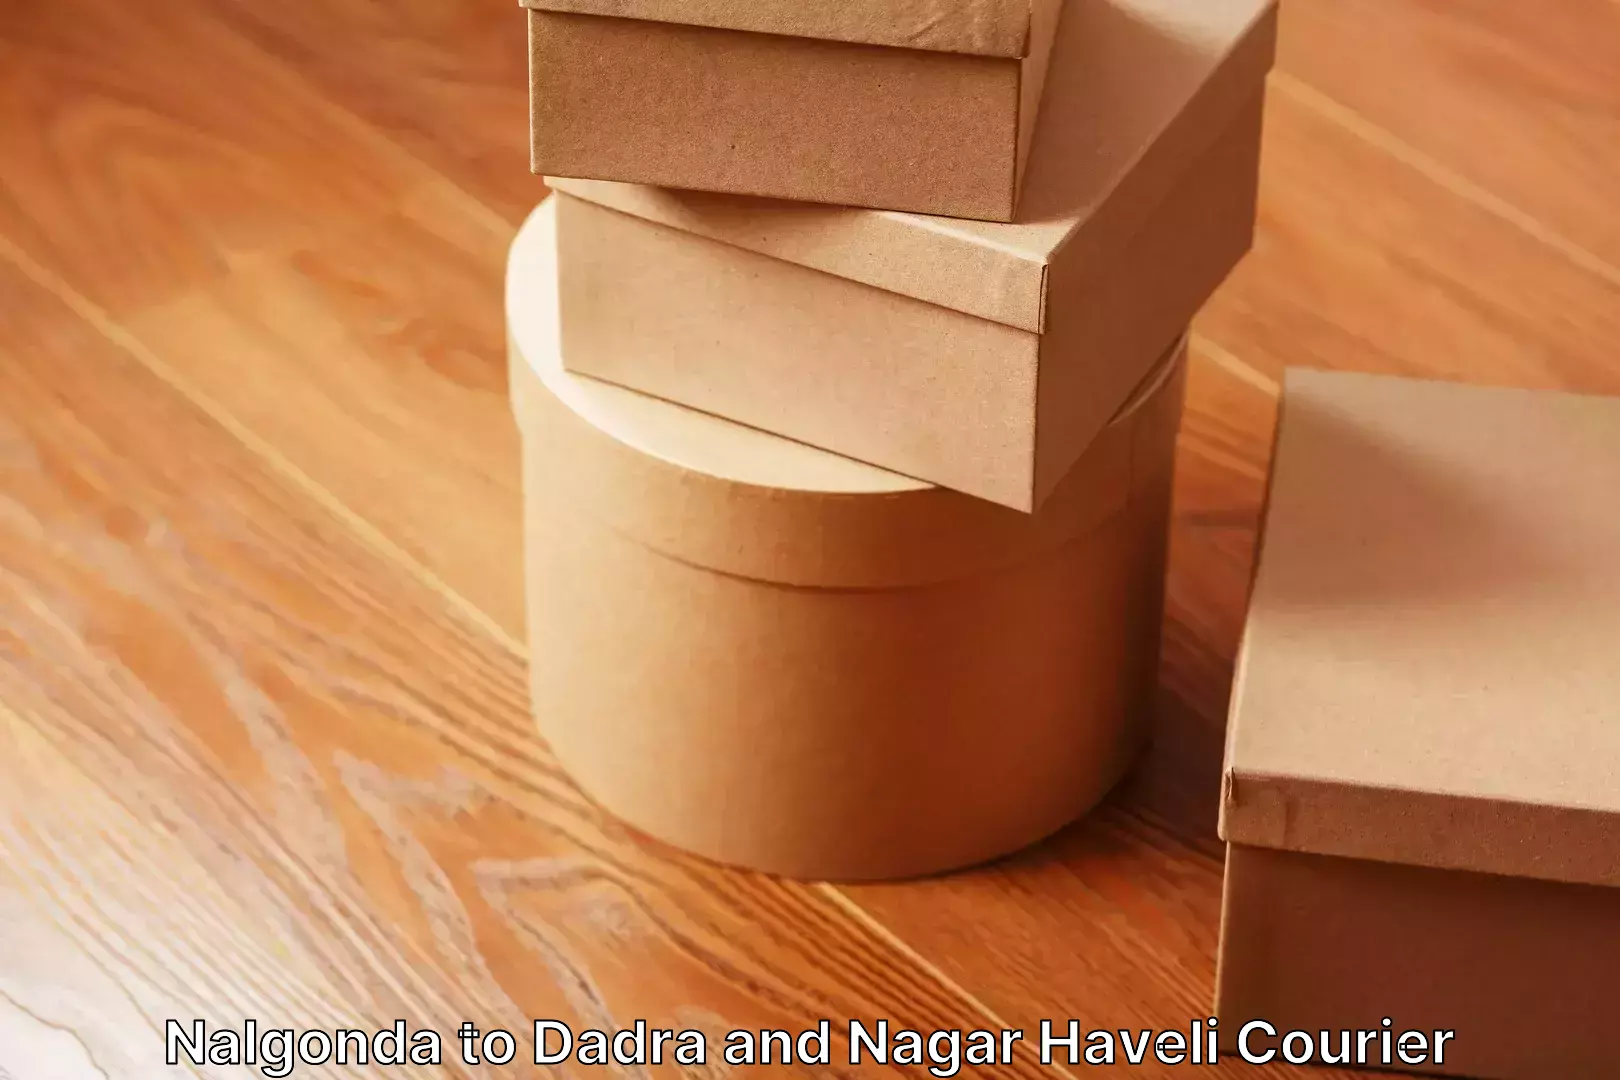 Furniture transport specialists Nalgonda to Dadra and Nagar Haveli